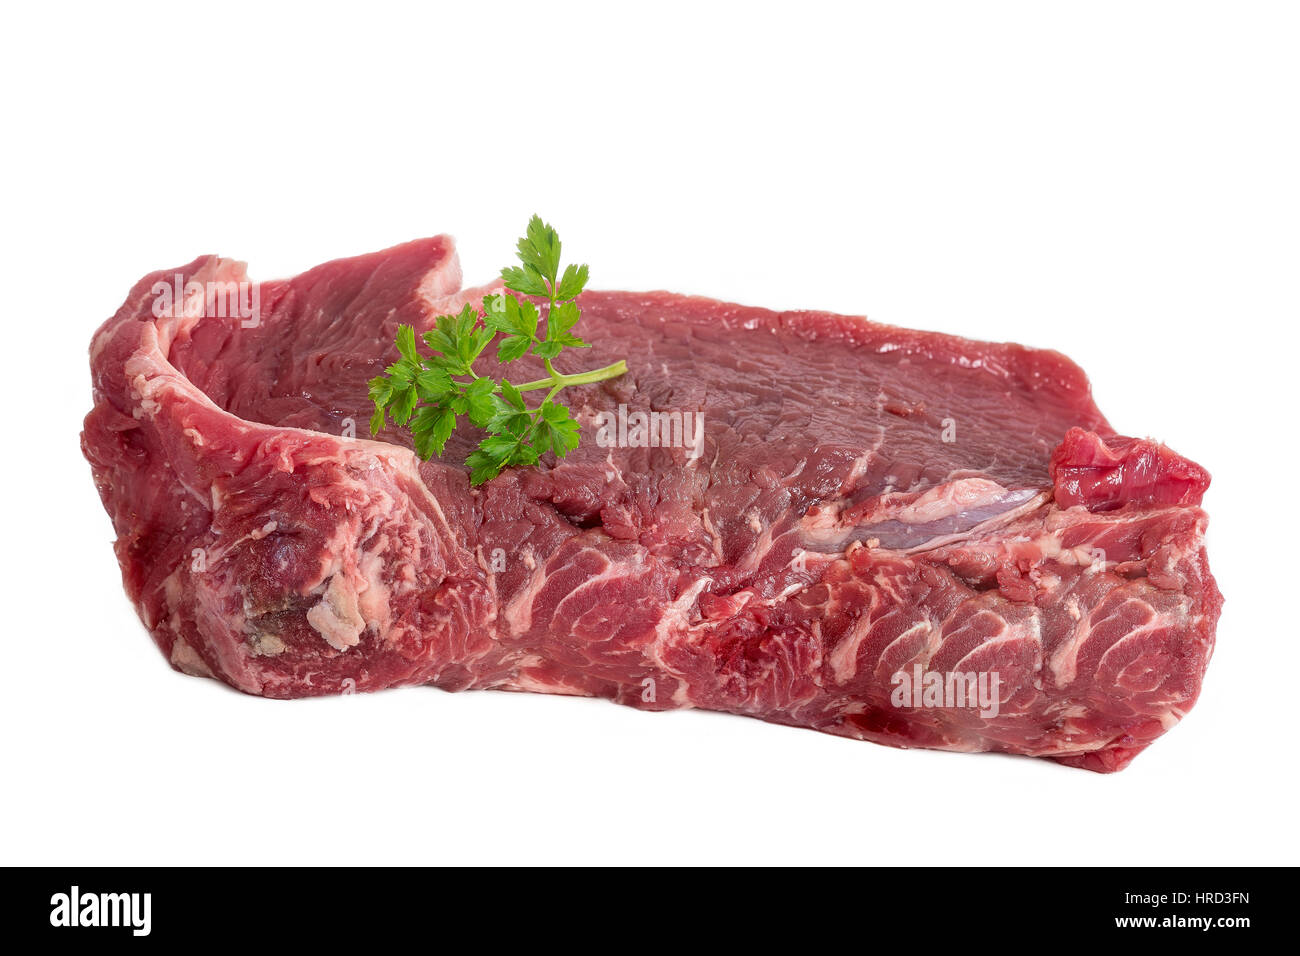 All Natural Flank Steak | Roseda Farm, Monkton, MD